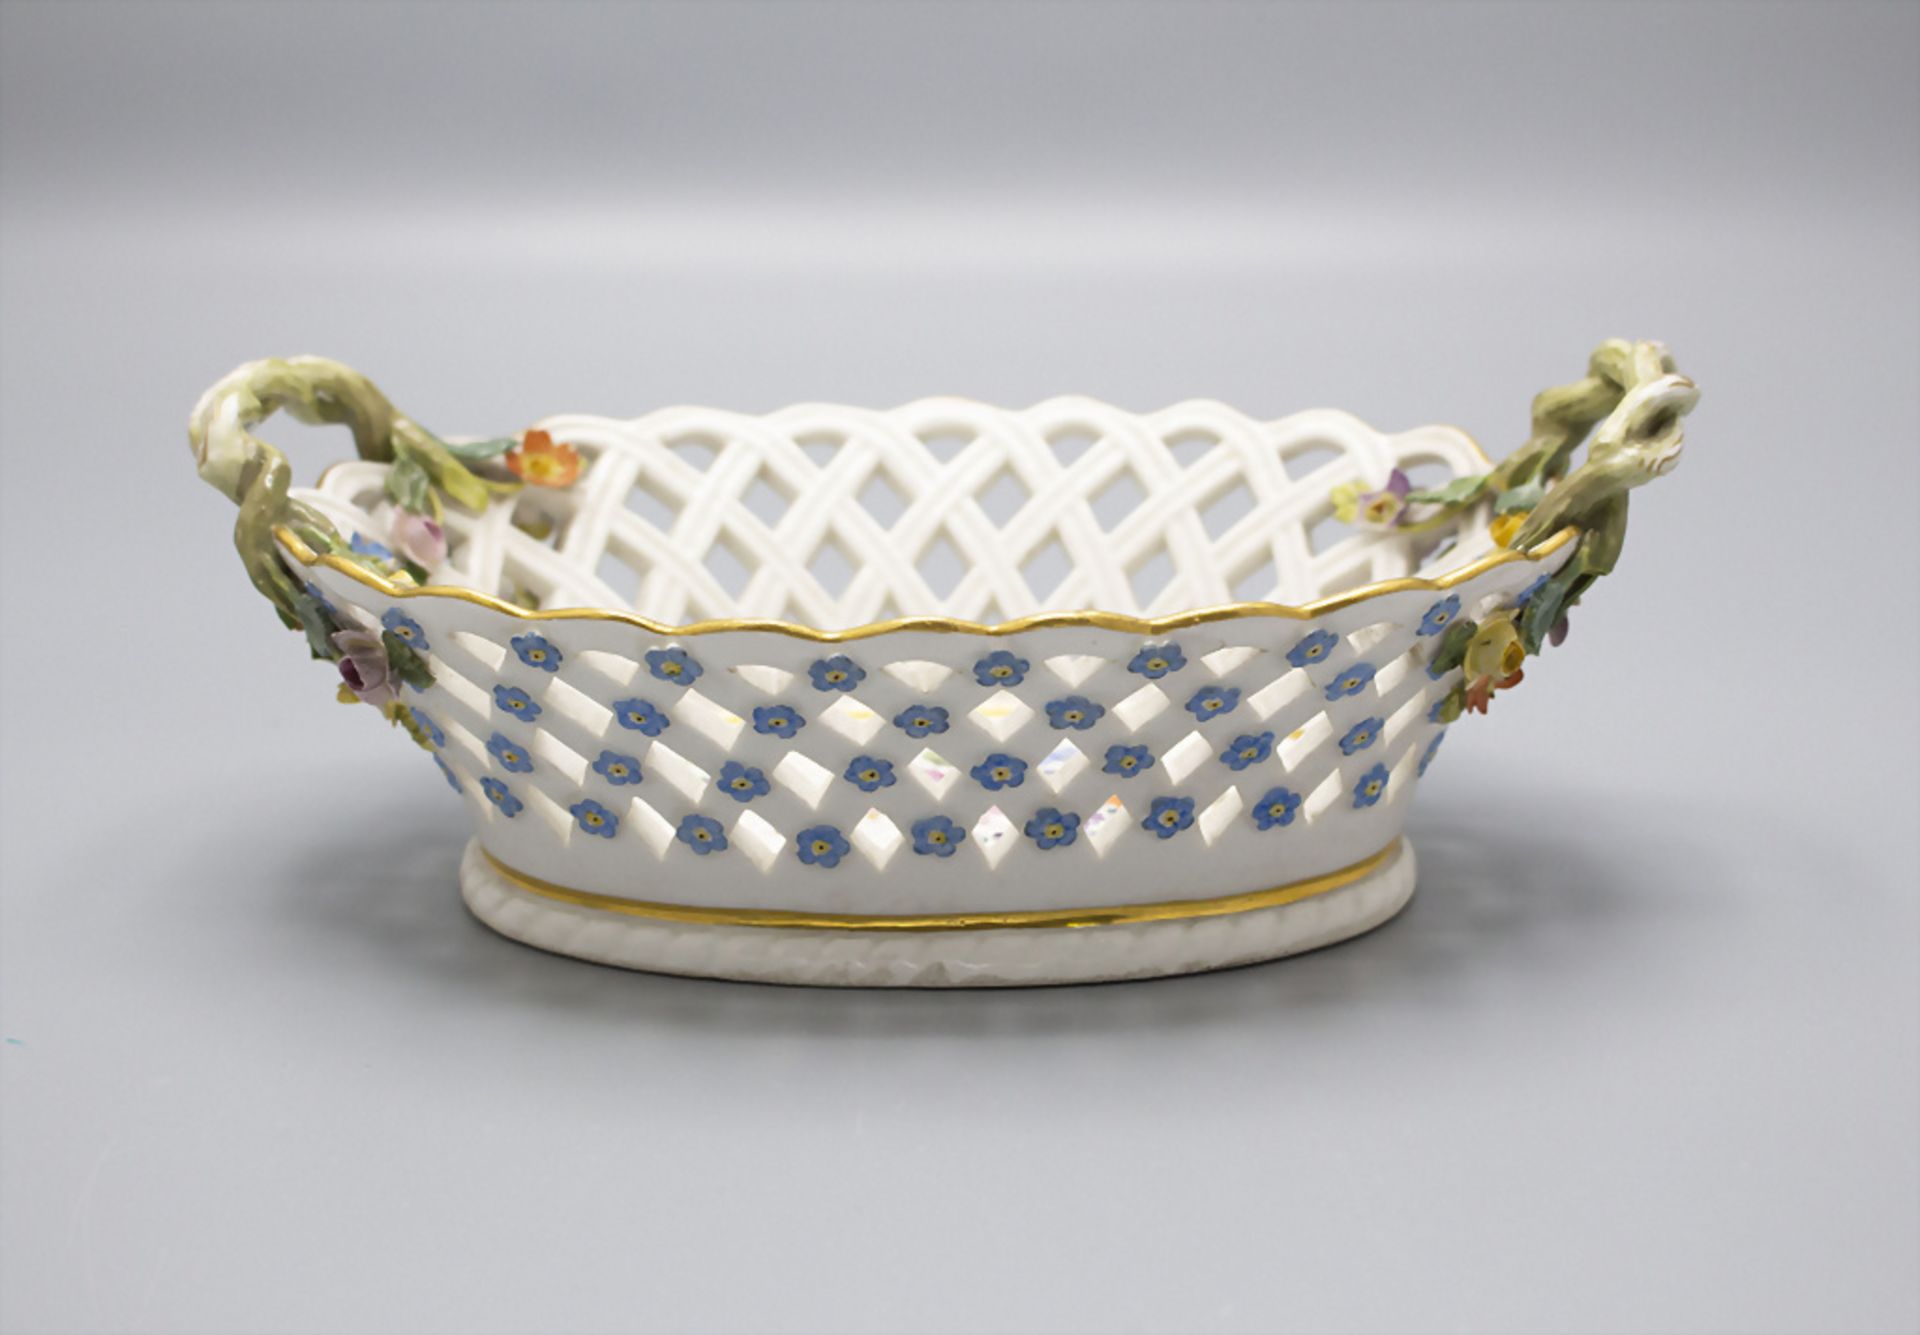 Zierschale mit aufgelegten Blüten / A decorative bowl with encrusted forget-me-not blossoms ... - Image 3 of 5